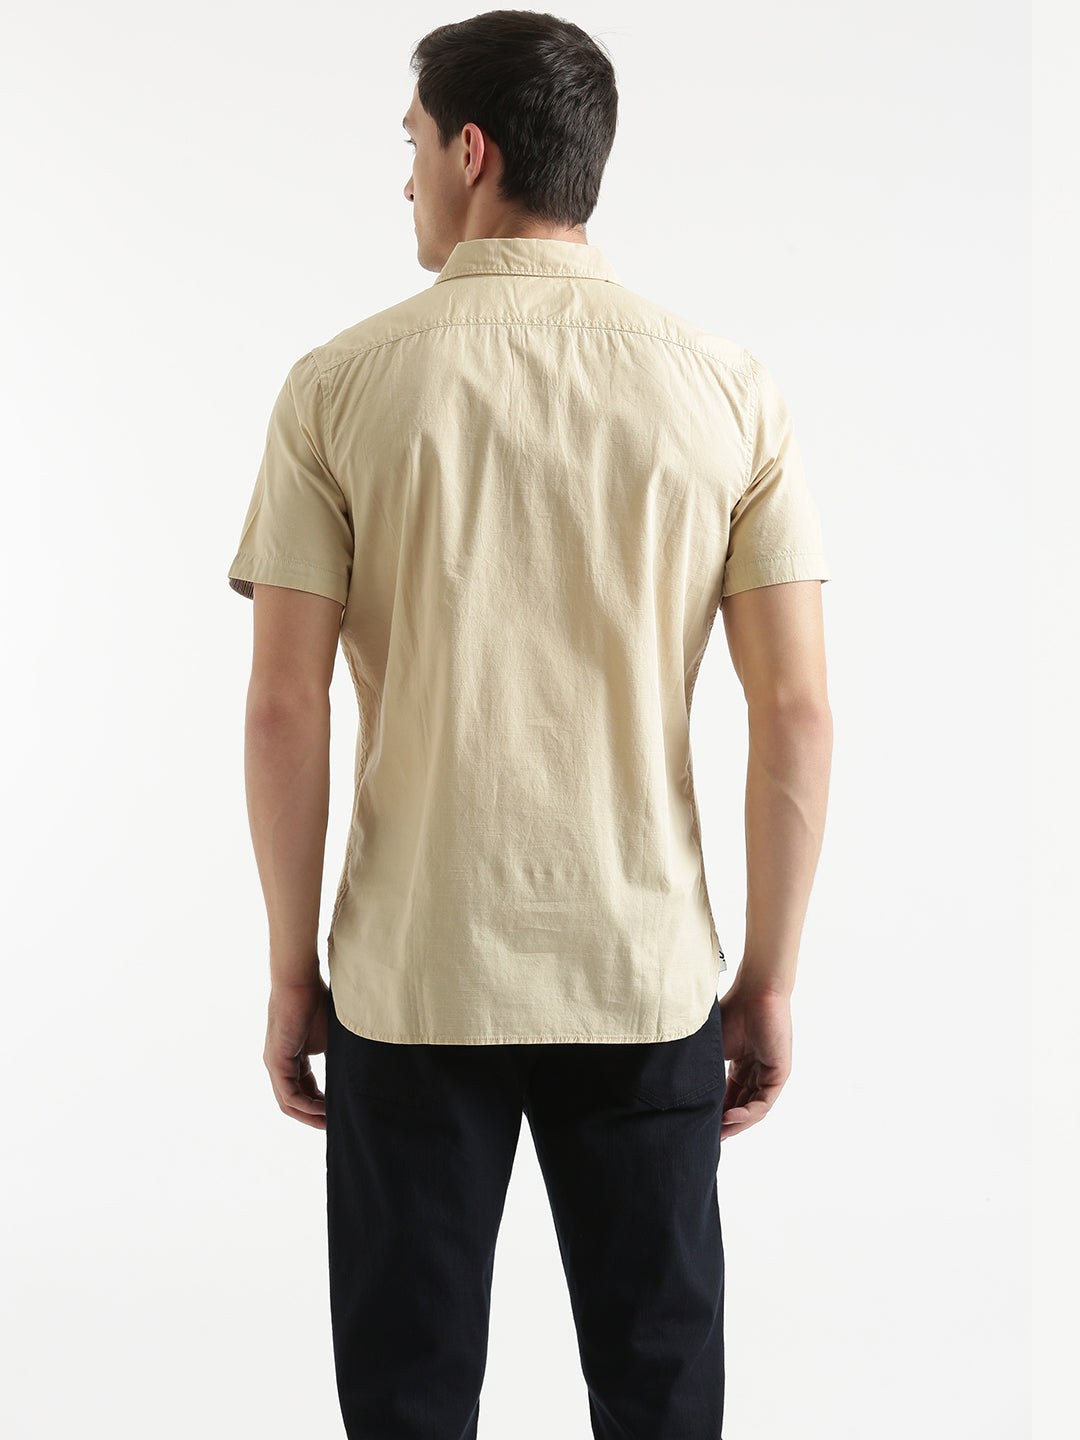 Casual Ease Half-Sleeve Shirt